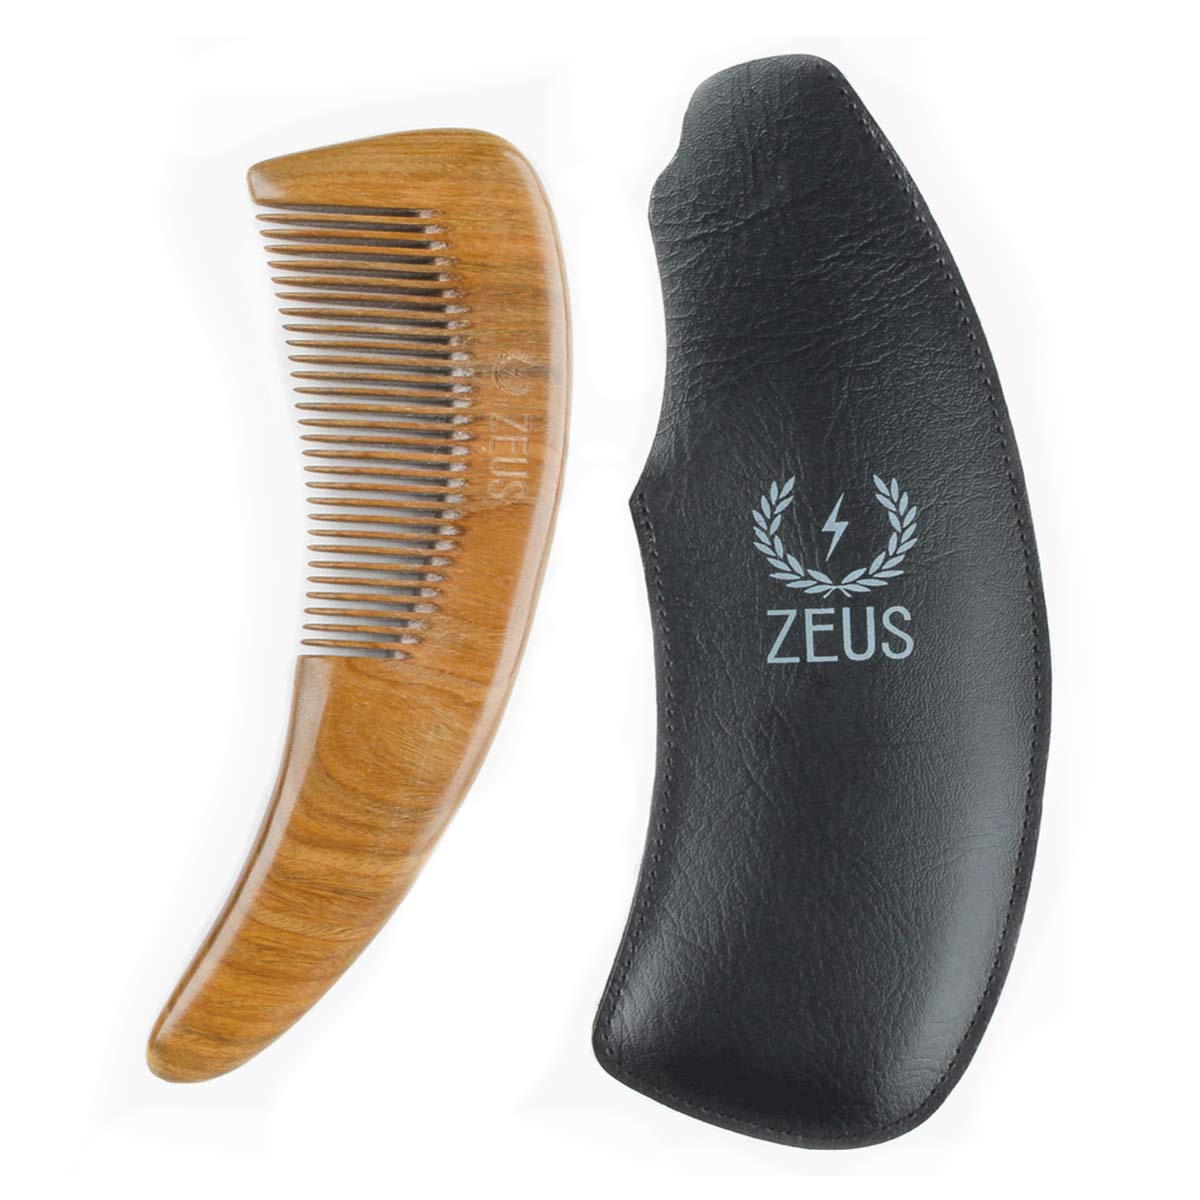 Alternate image of Large Curved Sandalwood Beard Comb